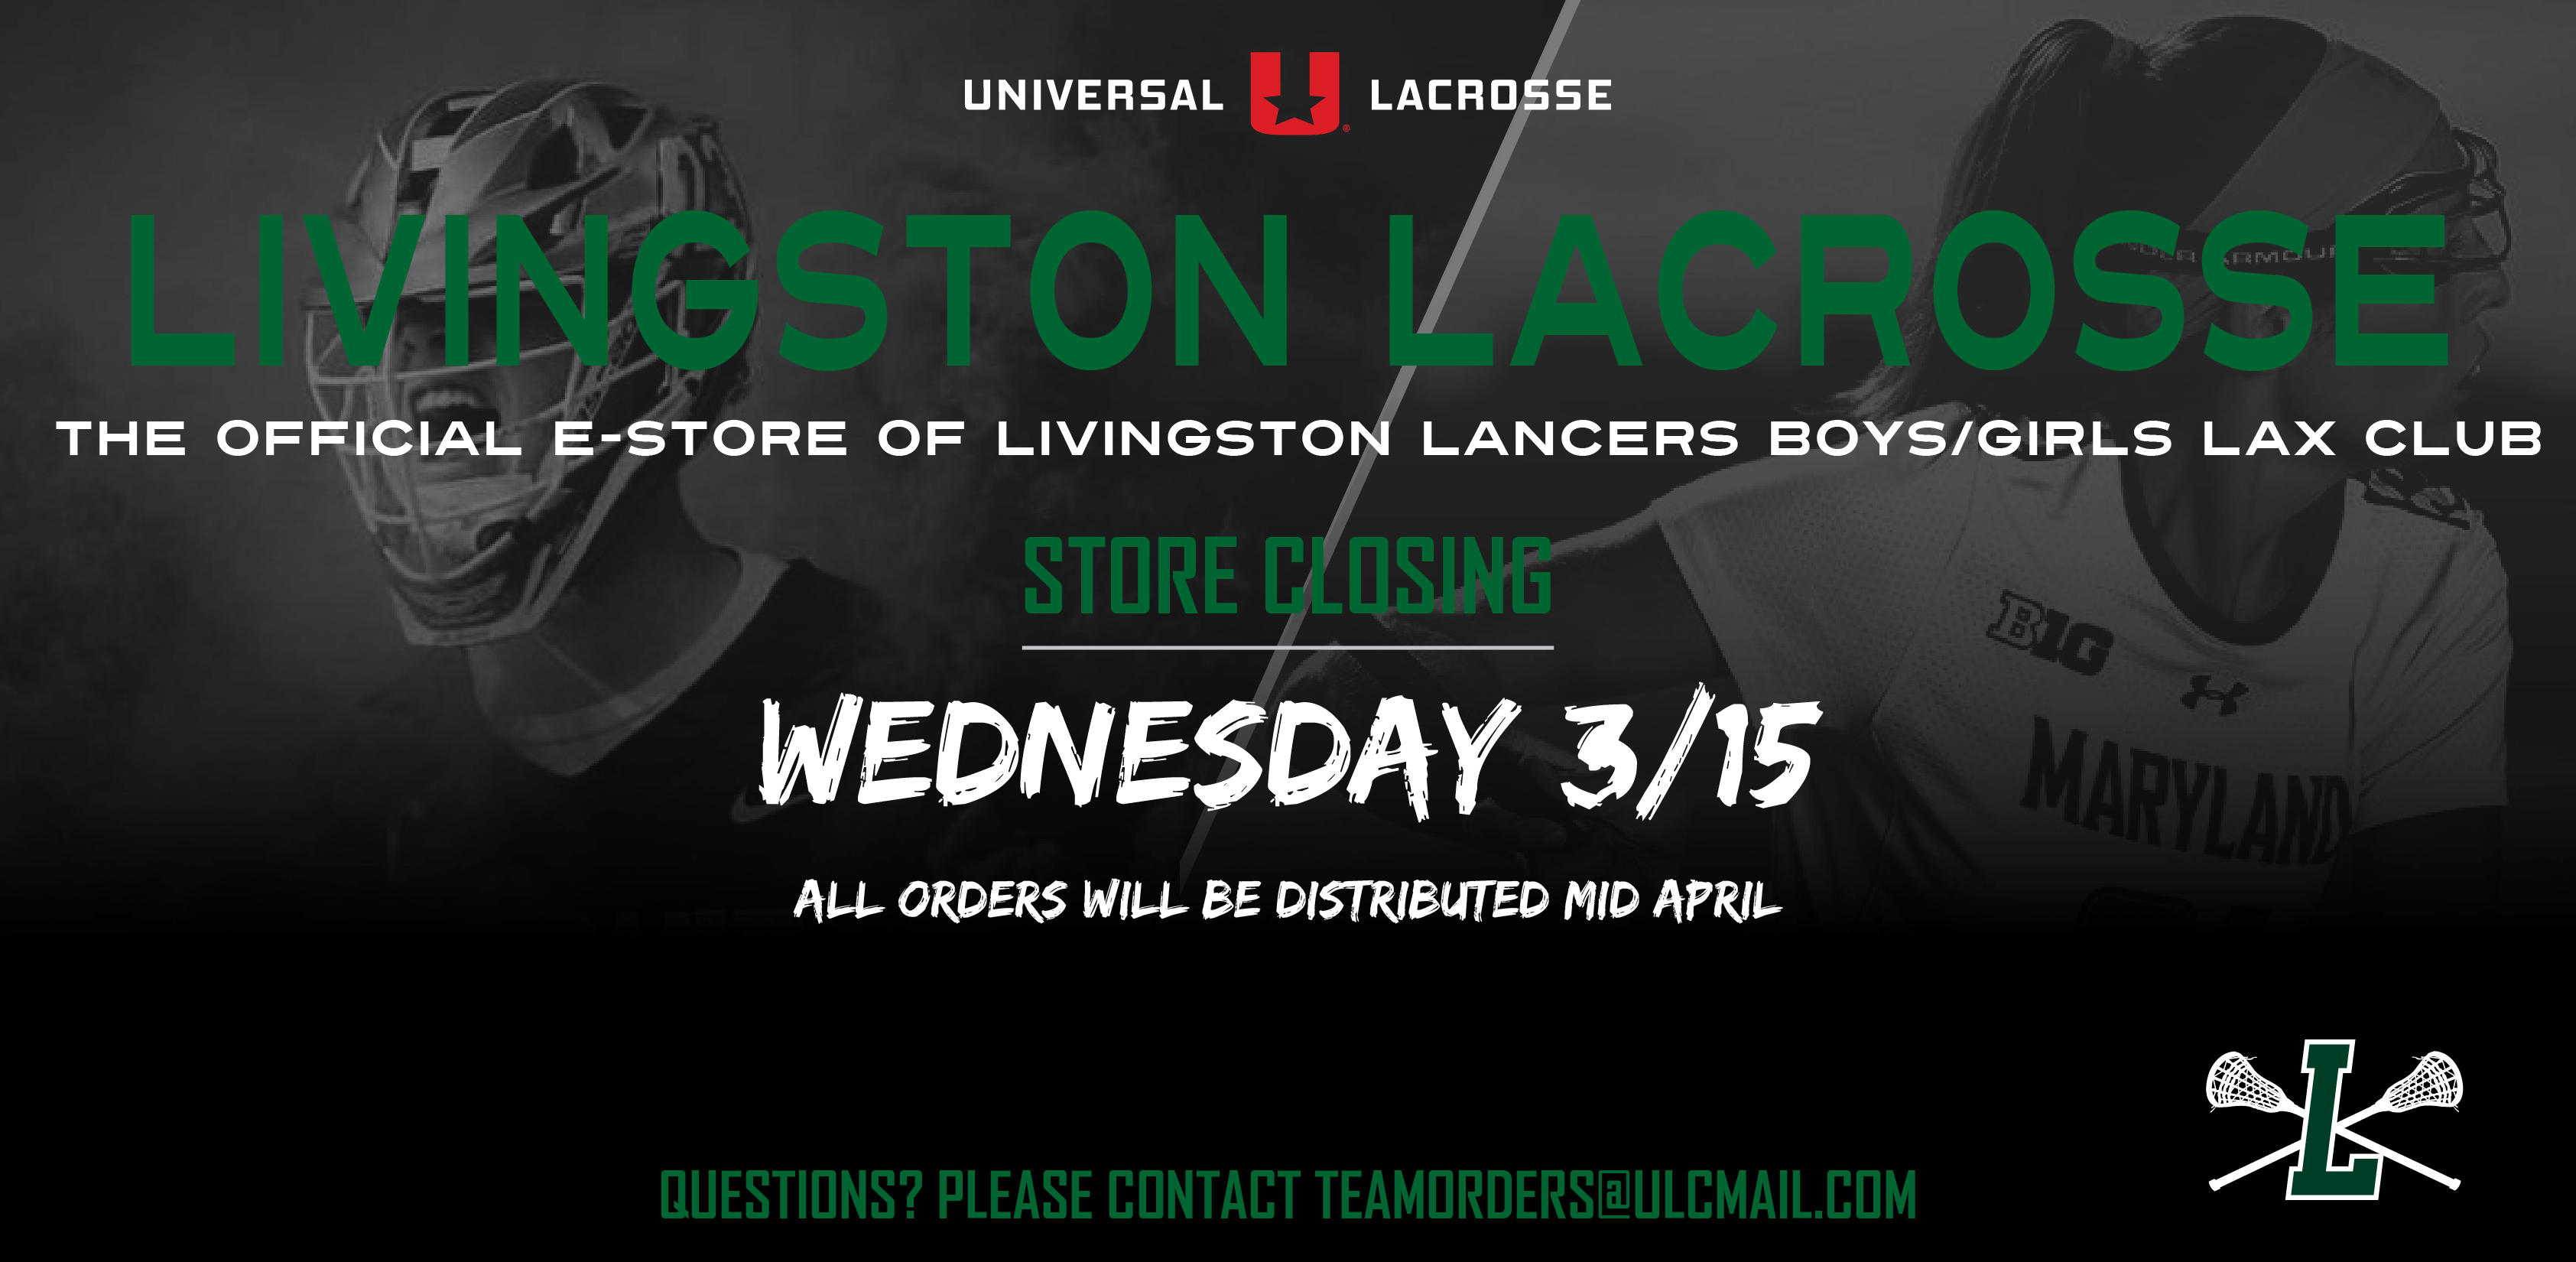 Livingston Lancers Lacrosse Club